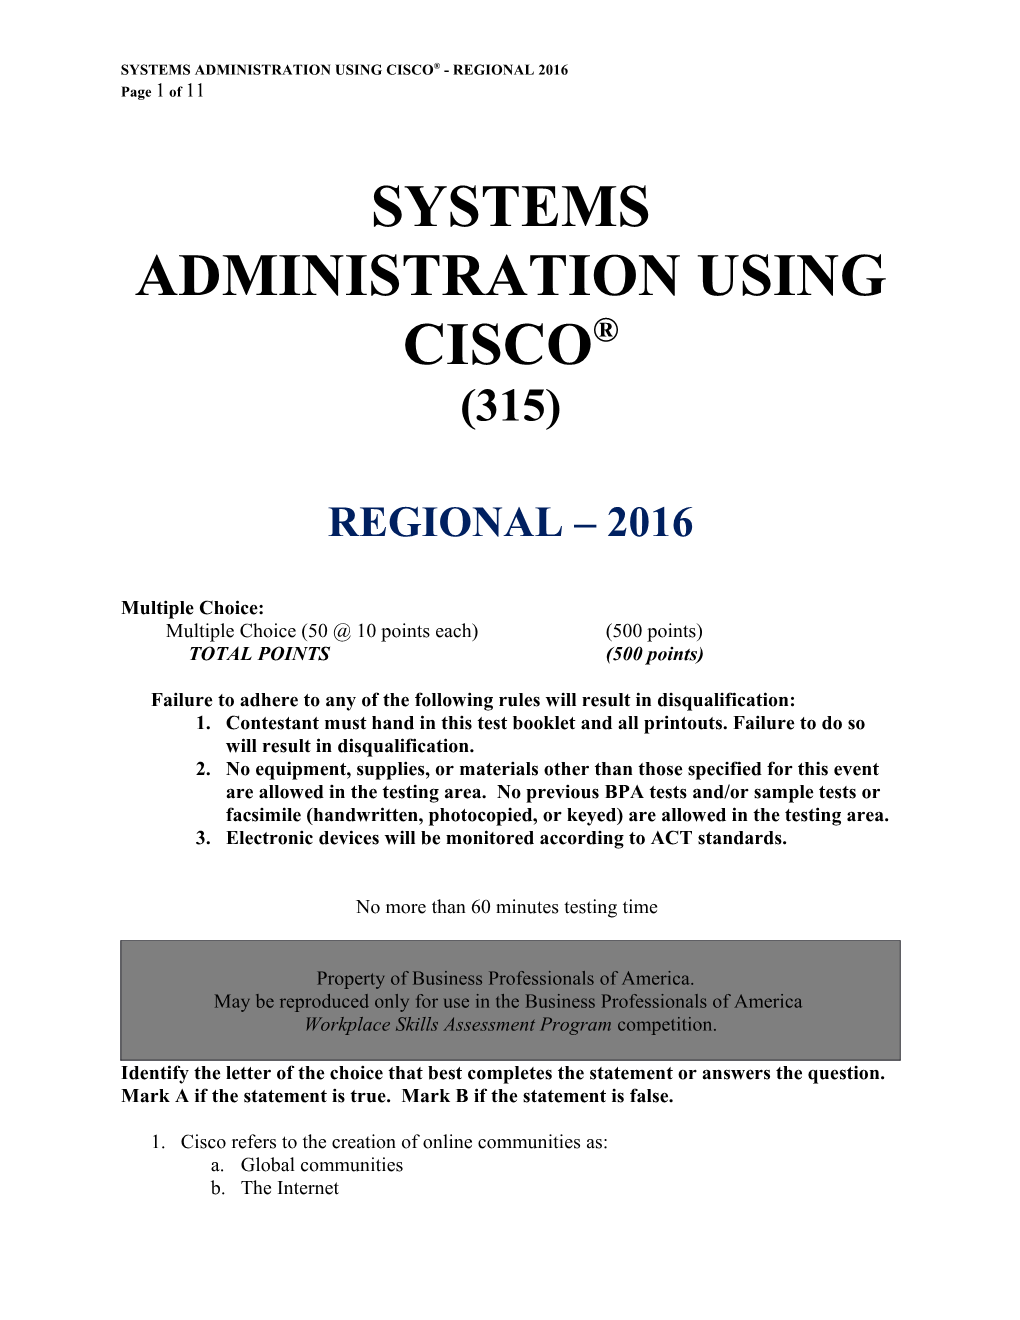 Systems Administration Using Cisco - Regional 2016